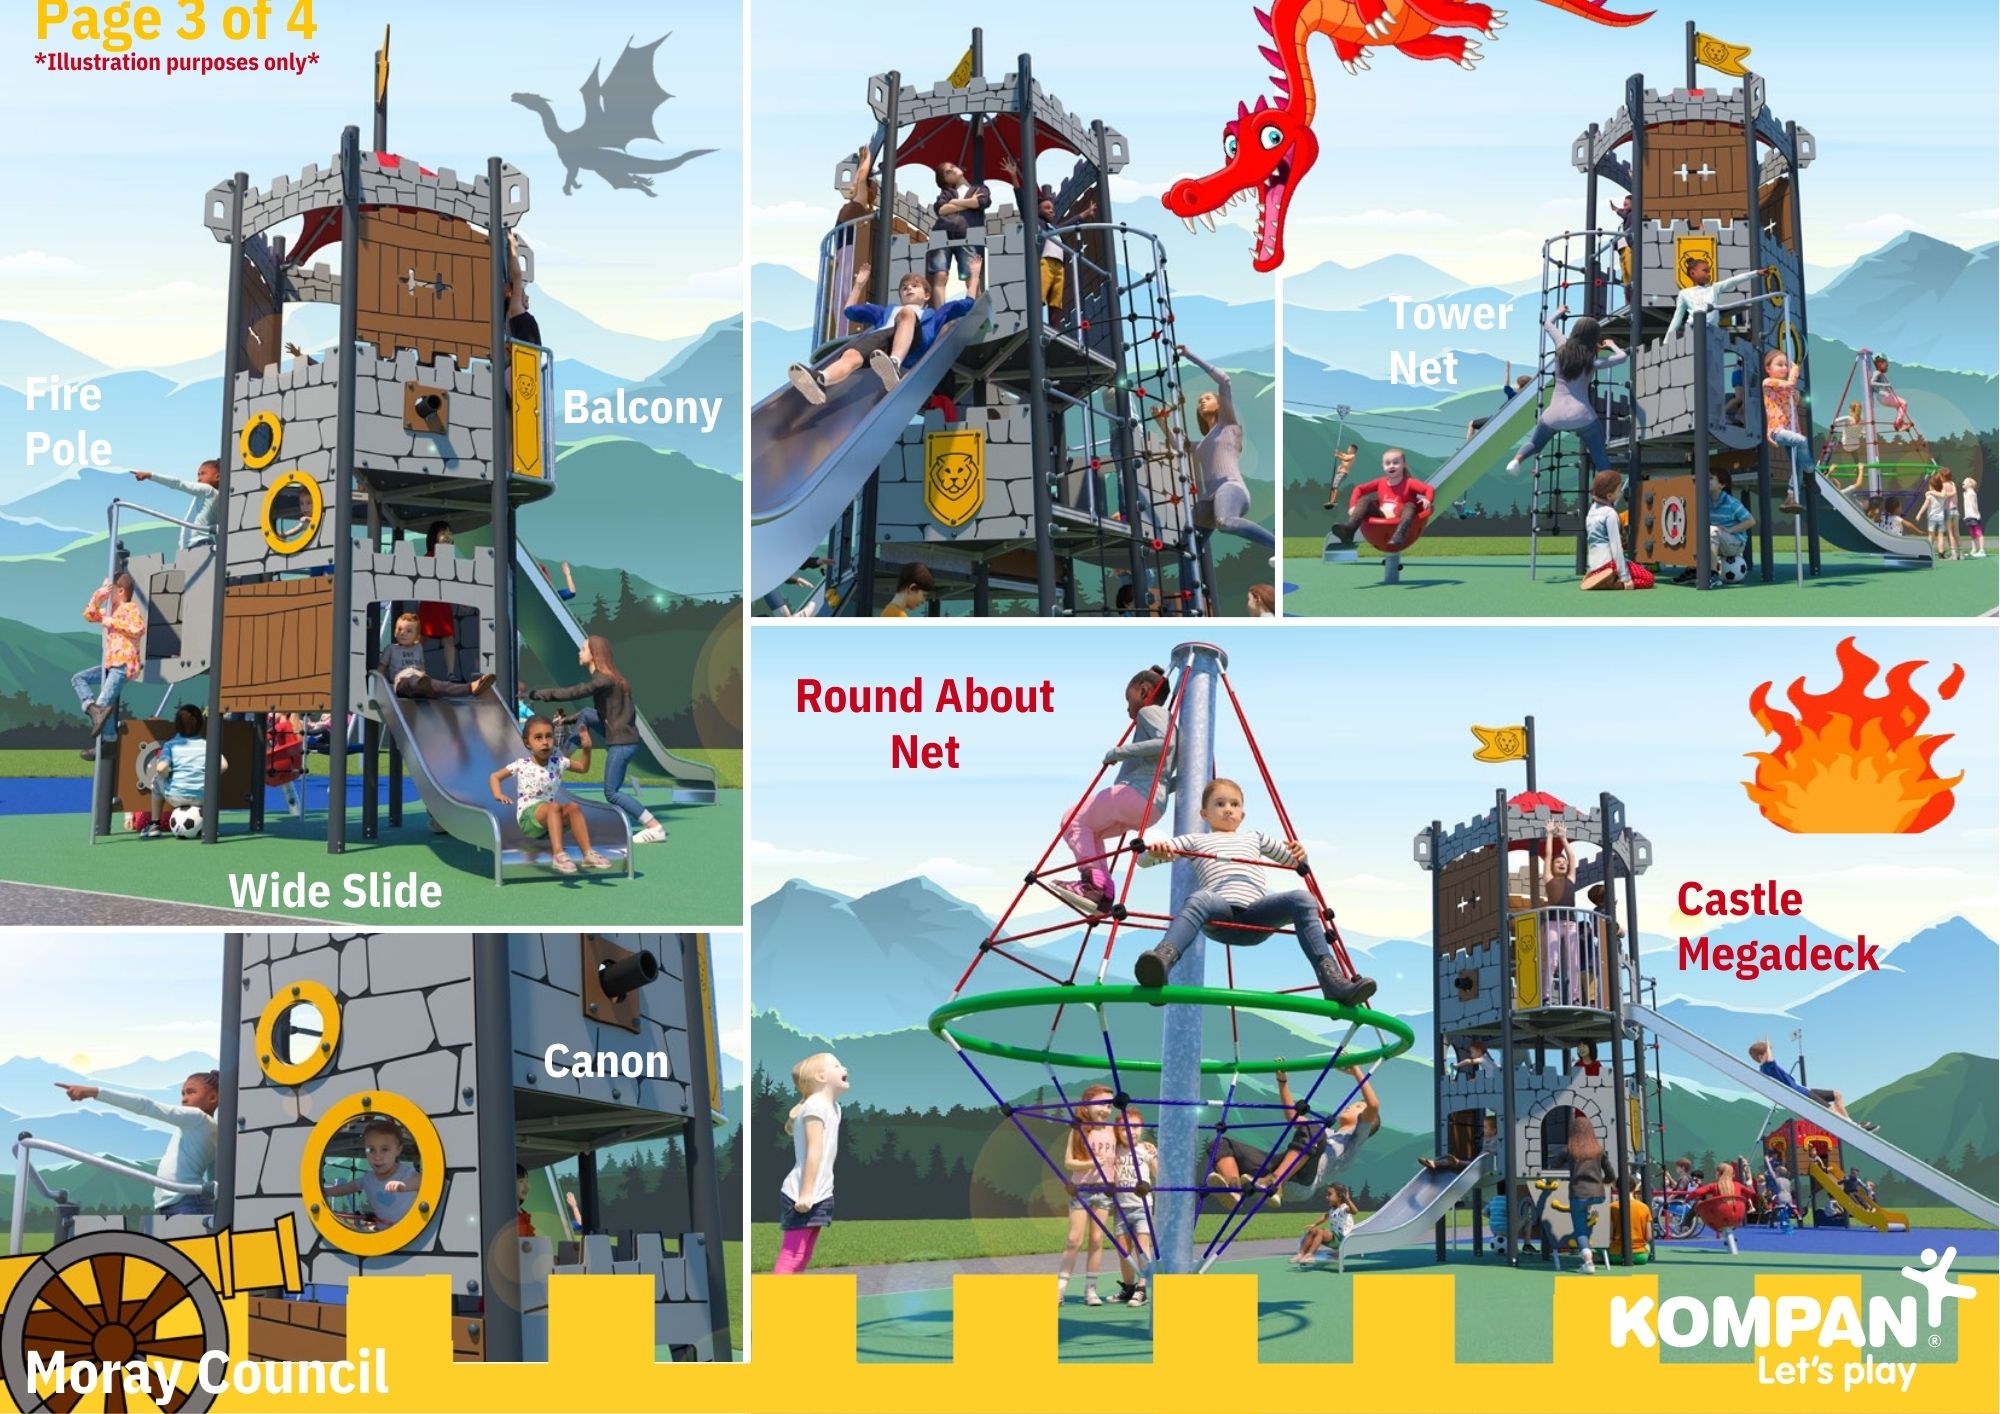 KOMPAN Playpark Design page 3